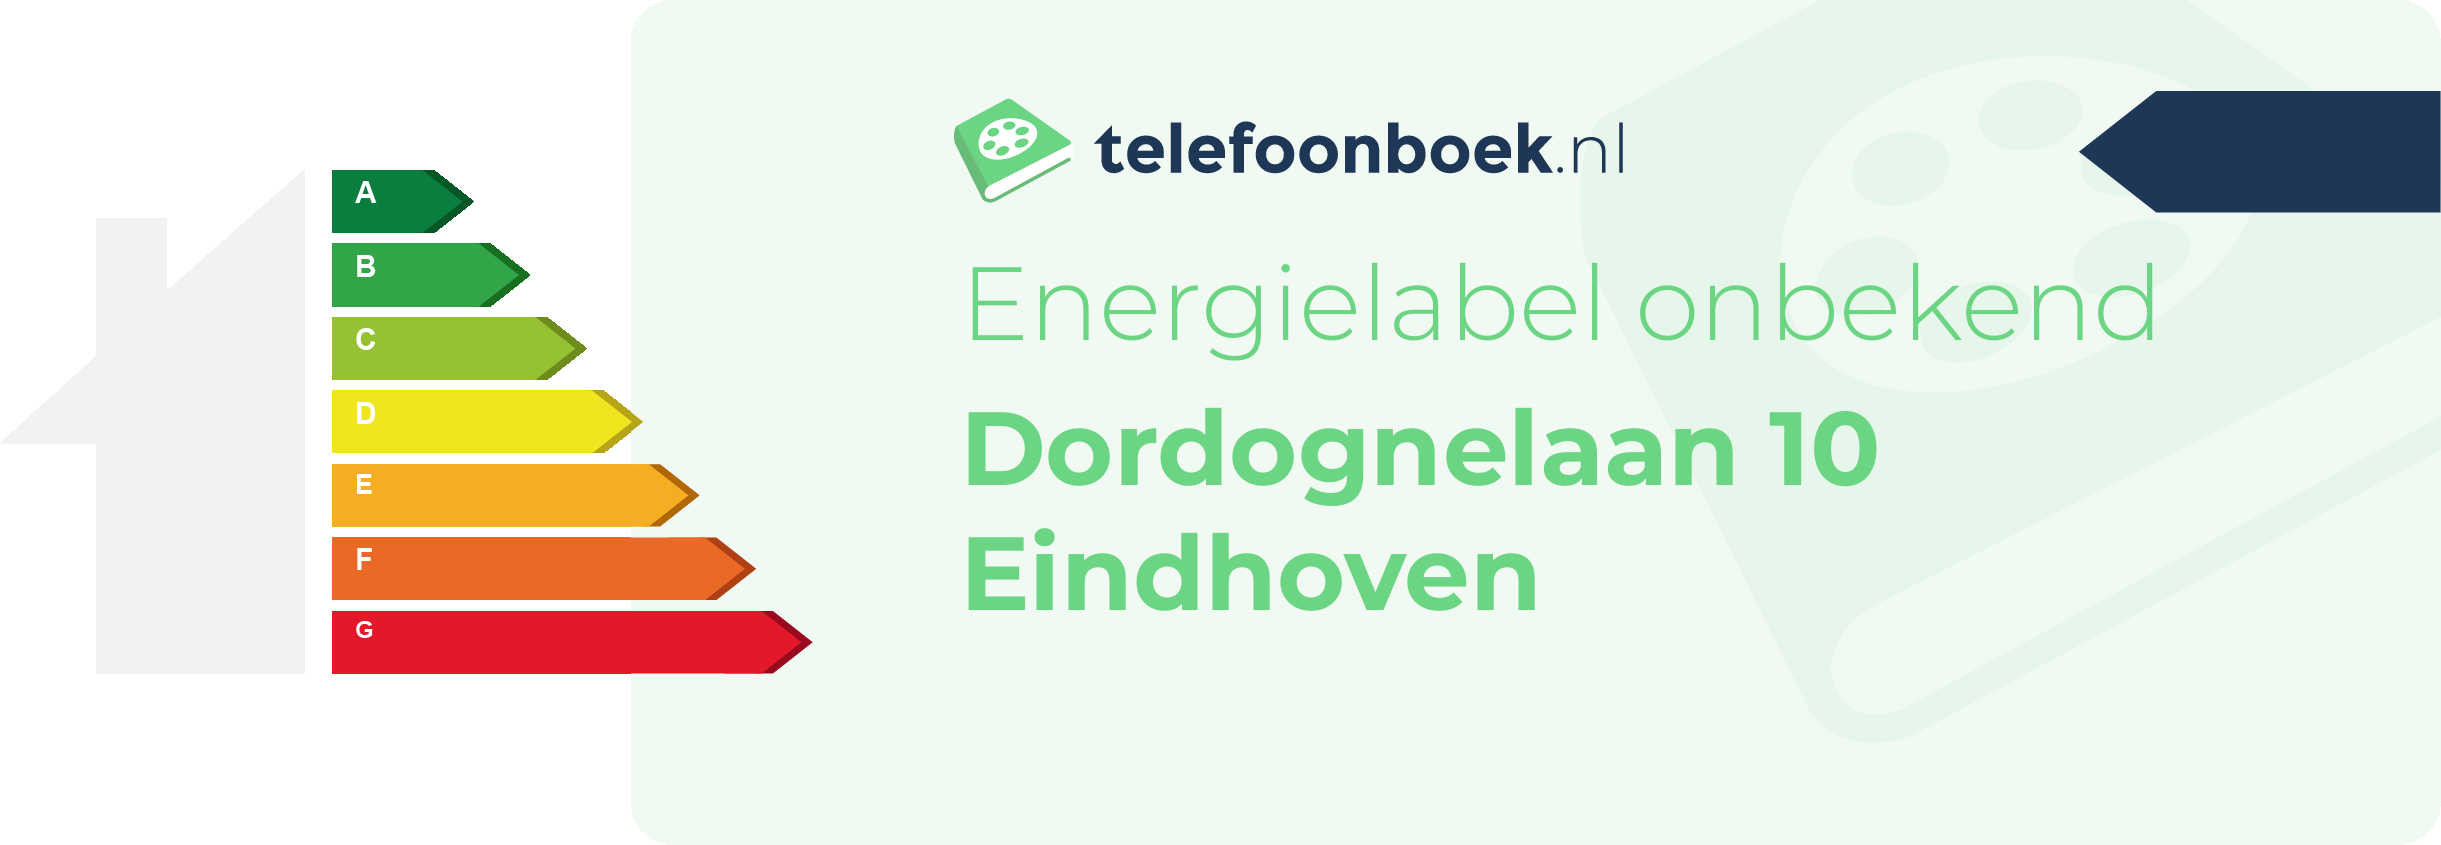 Energielabel Dordognelaan 10 Eindhoven